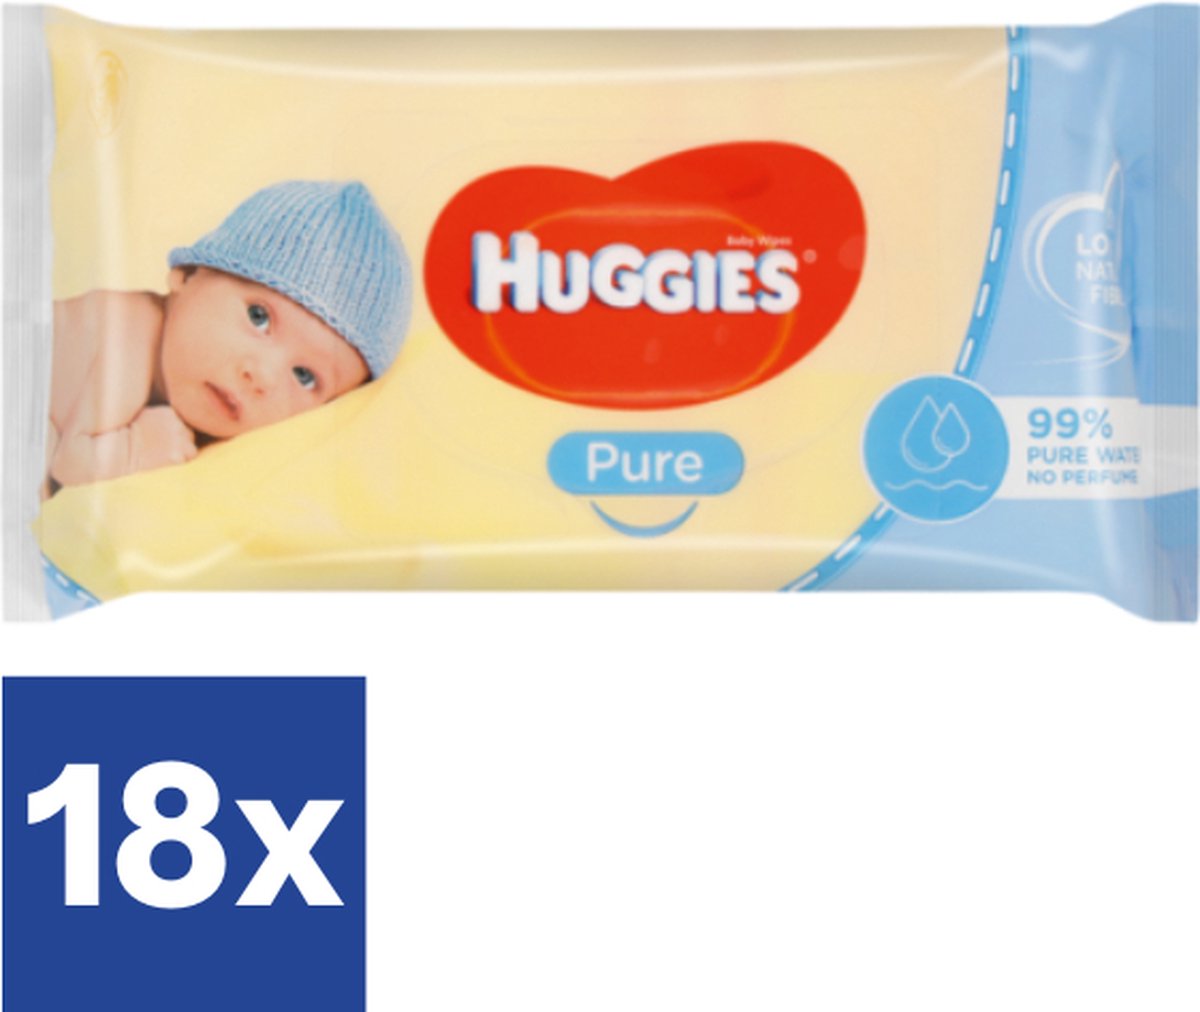 Huggies Lot de 3 paquets lingettes bébé Pure - x56 unités à prix